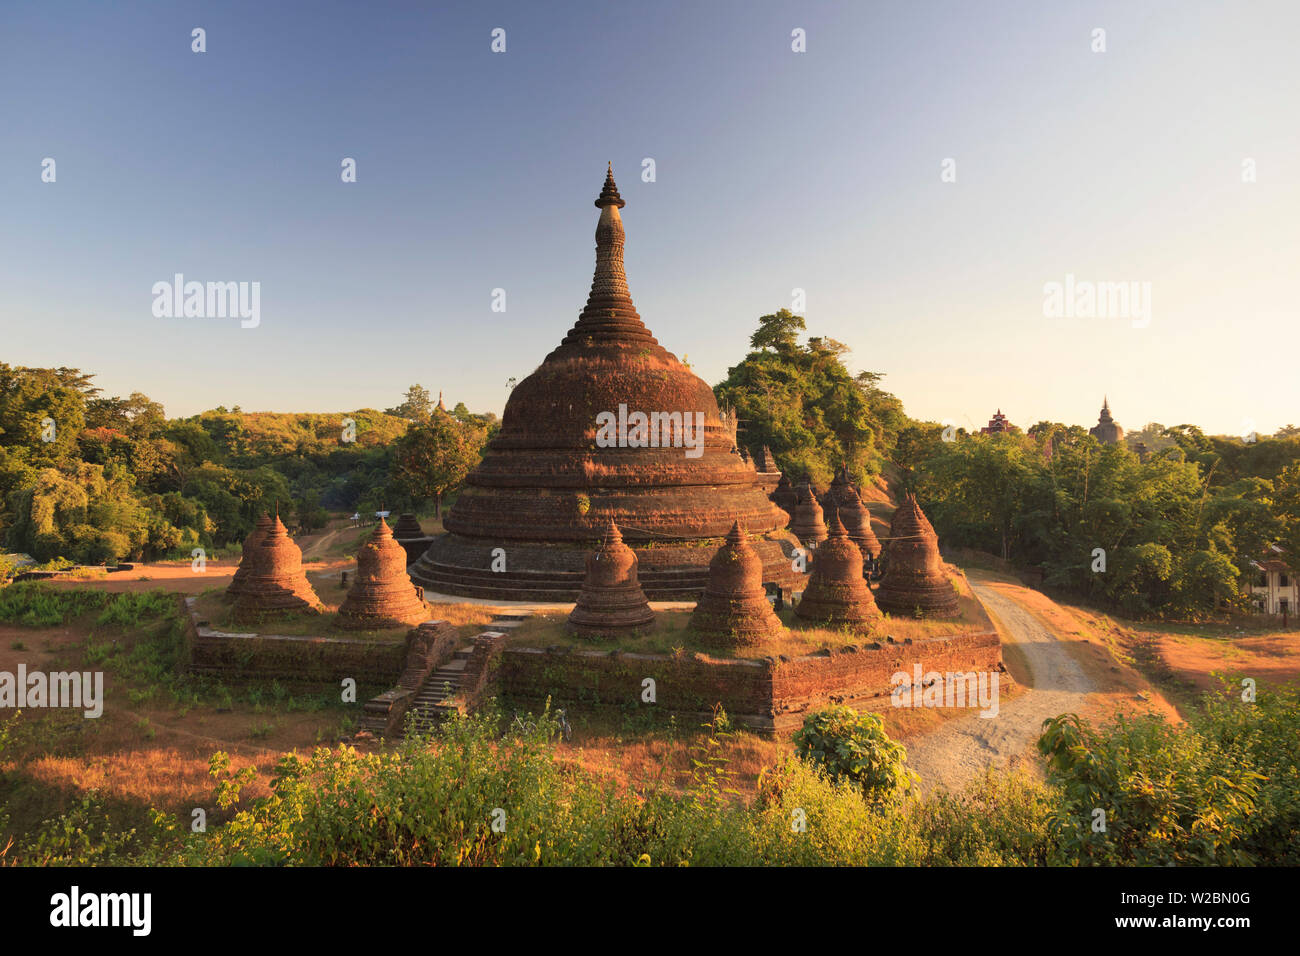 Myanmar (Burma), Rakhine State, Mrauk U Archaeological Site, temples at sunset Stock Photo